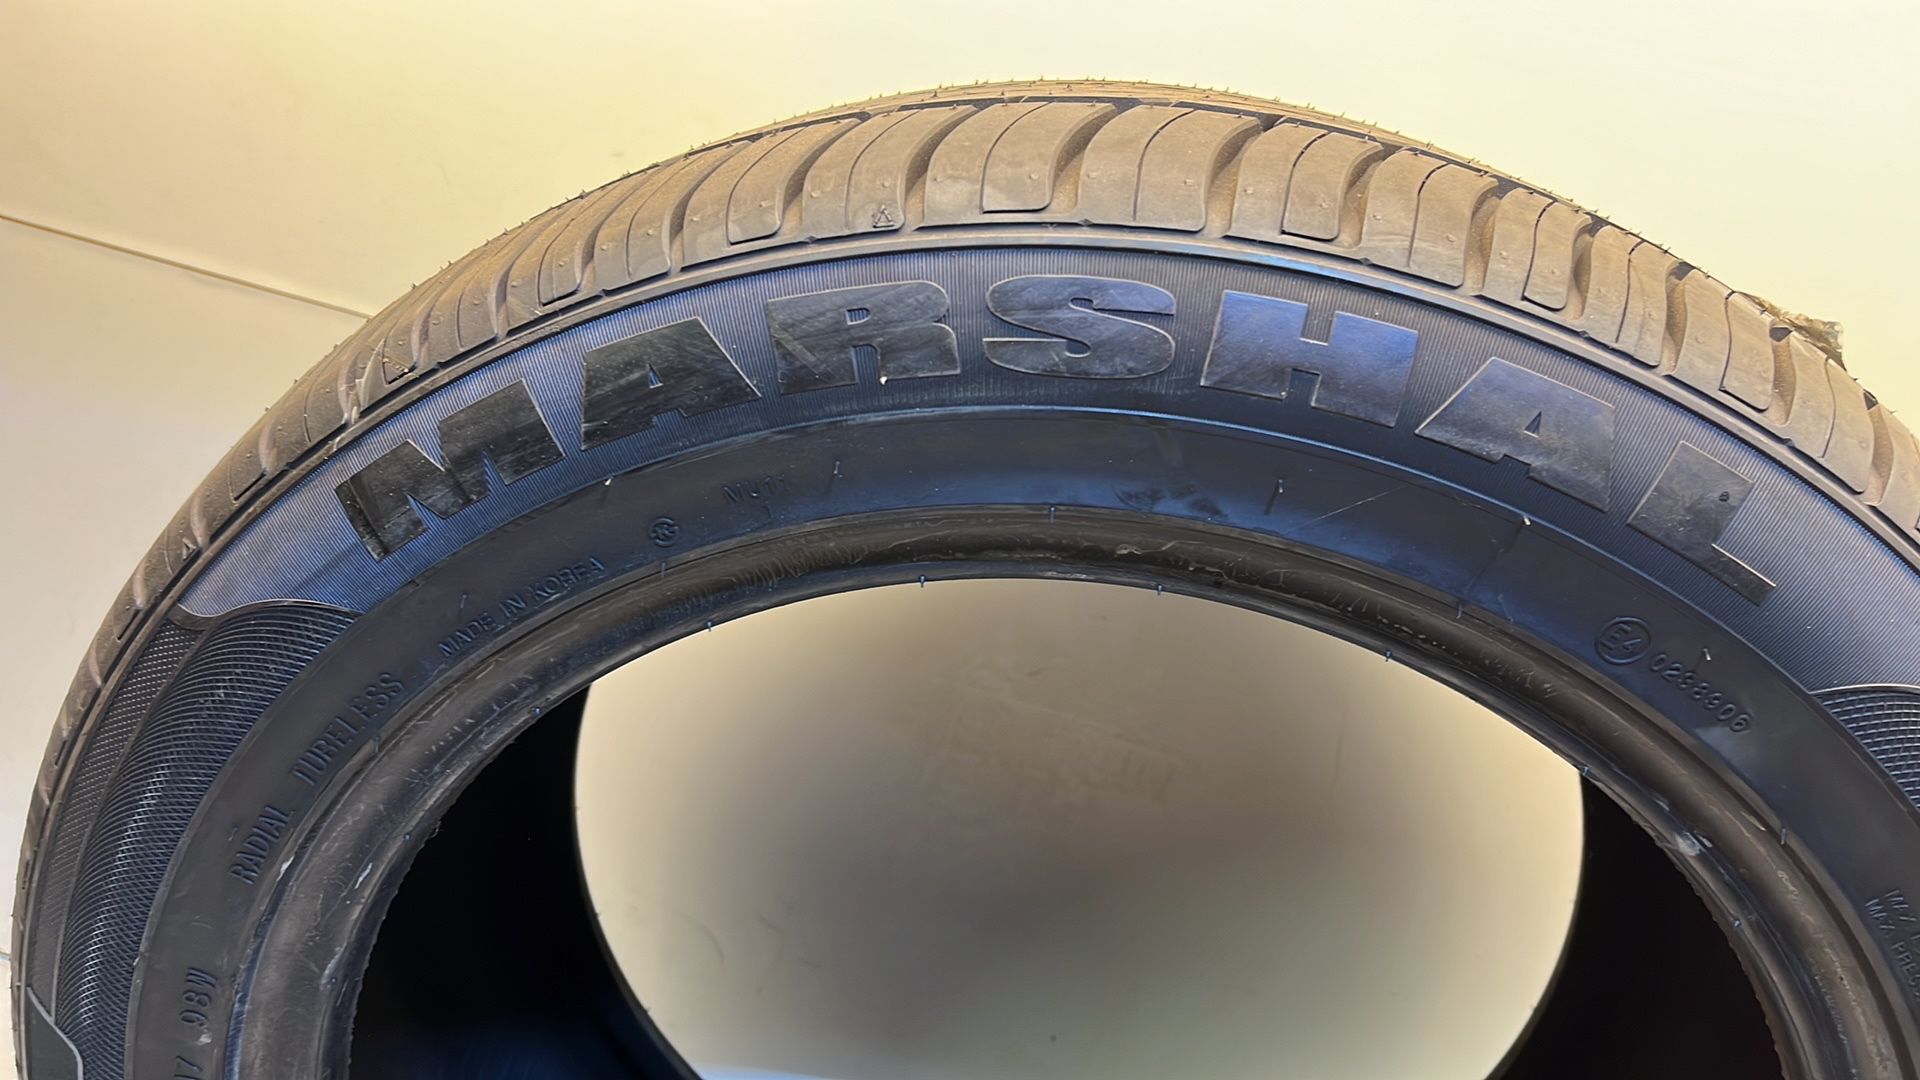 Marshall | Matrac Fc | 255/45 ZR17 Tyre - Image 5 of 5